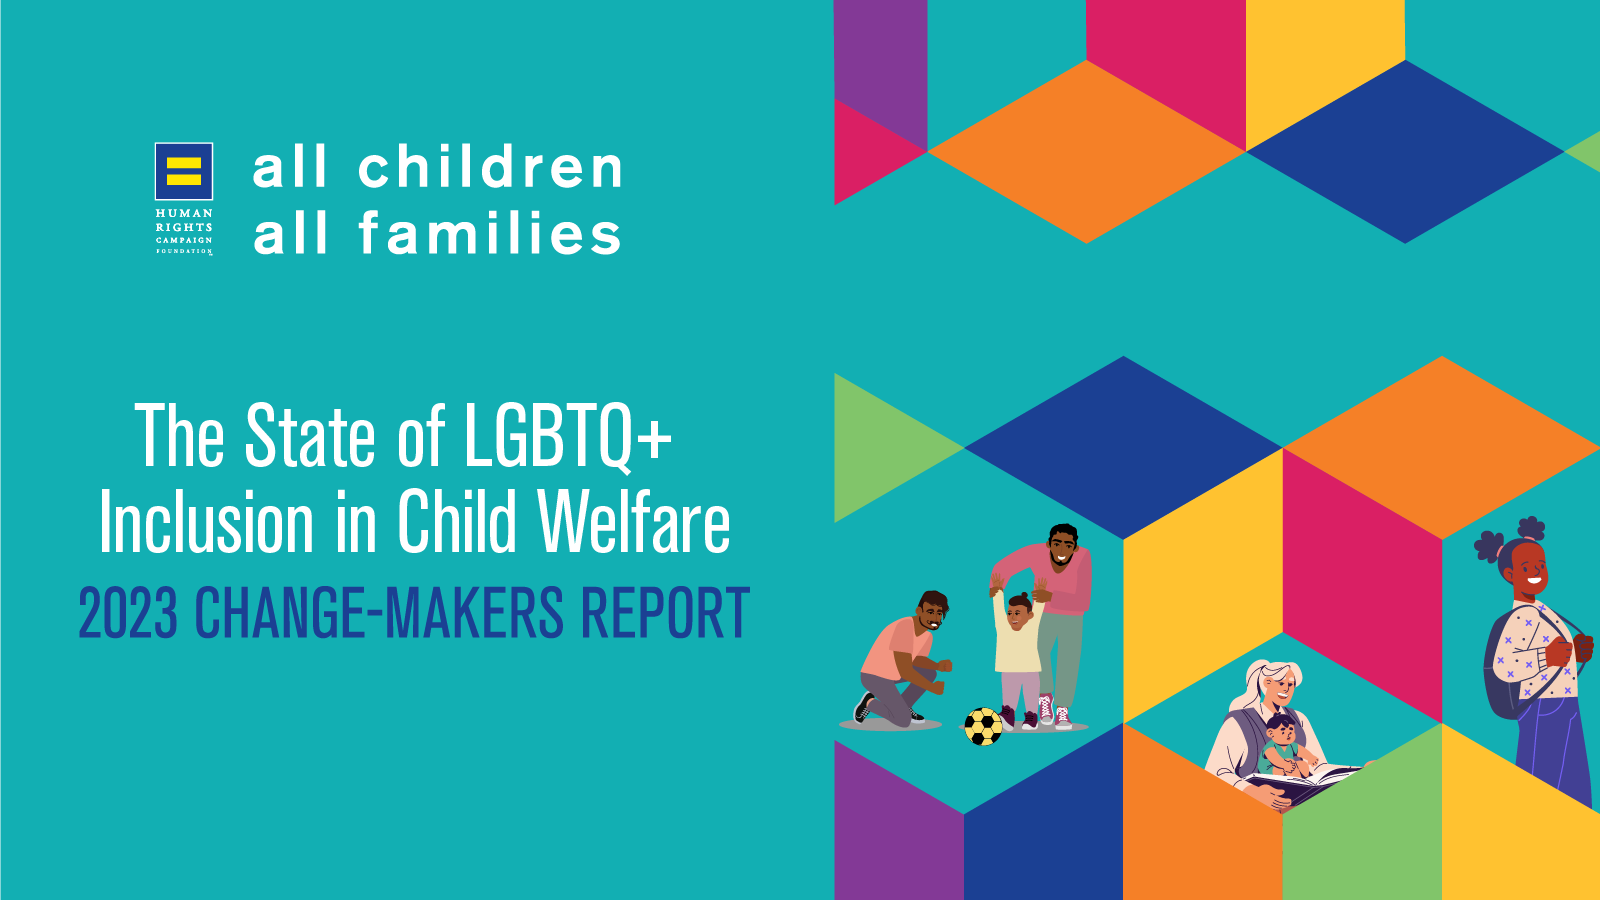 The State of LGBTQ+ Inclusion in Child Welfare